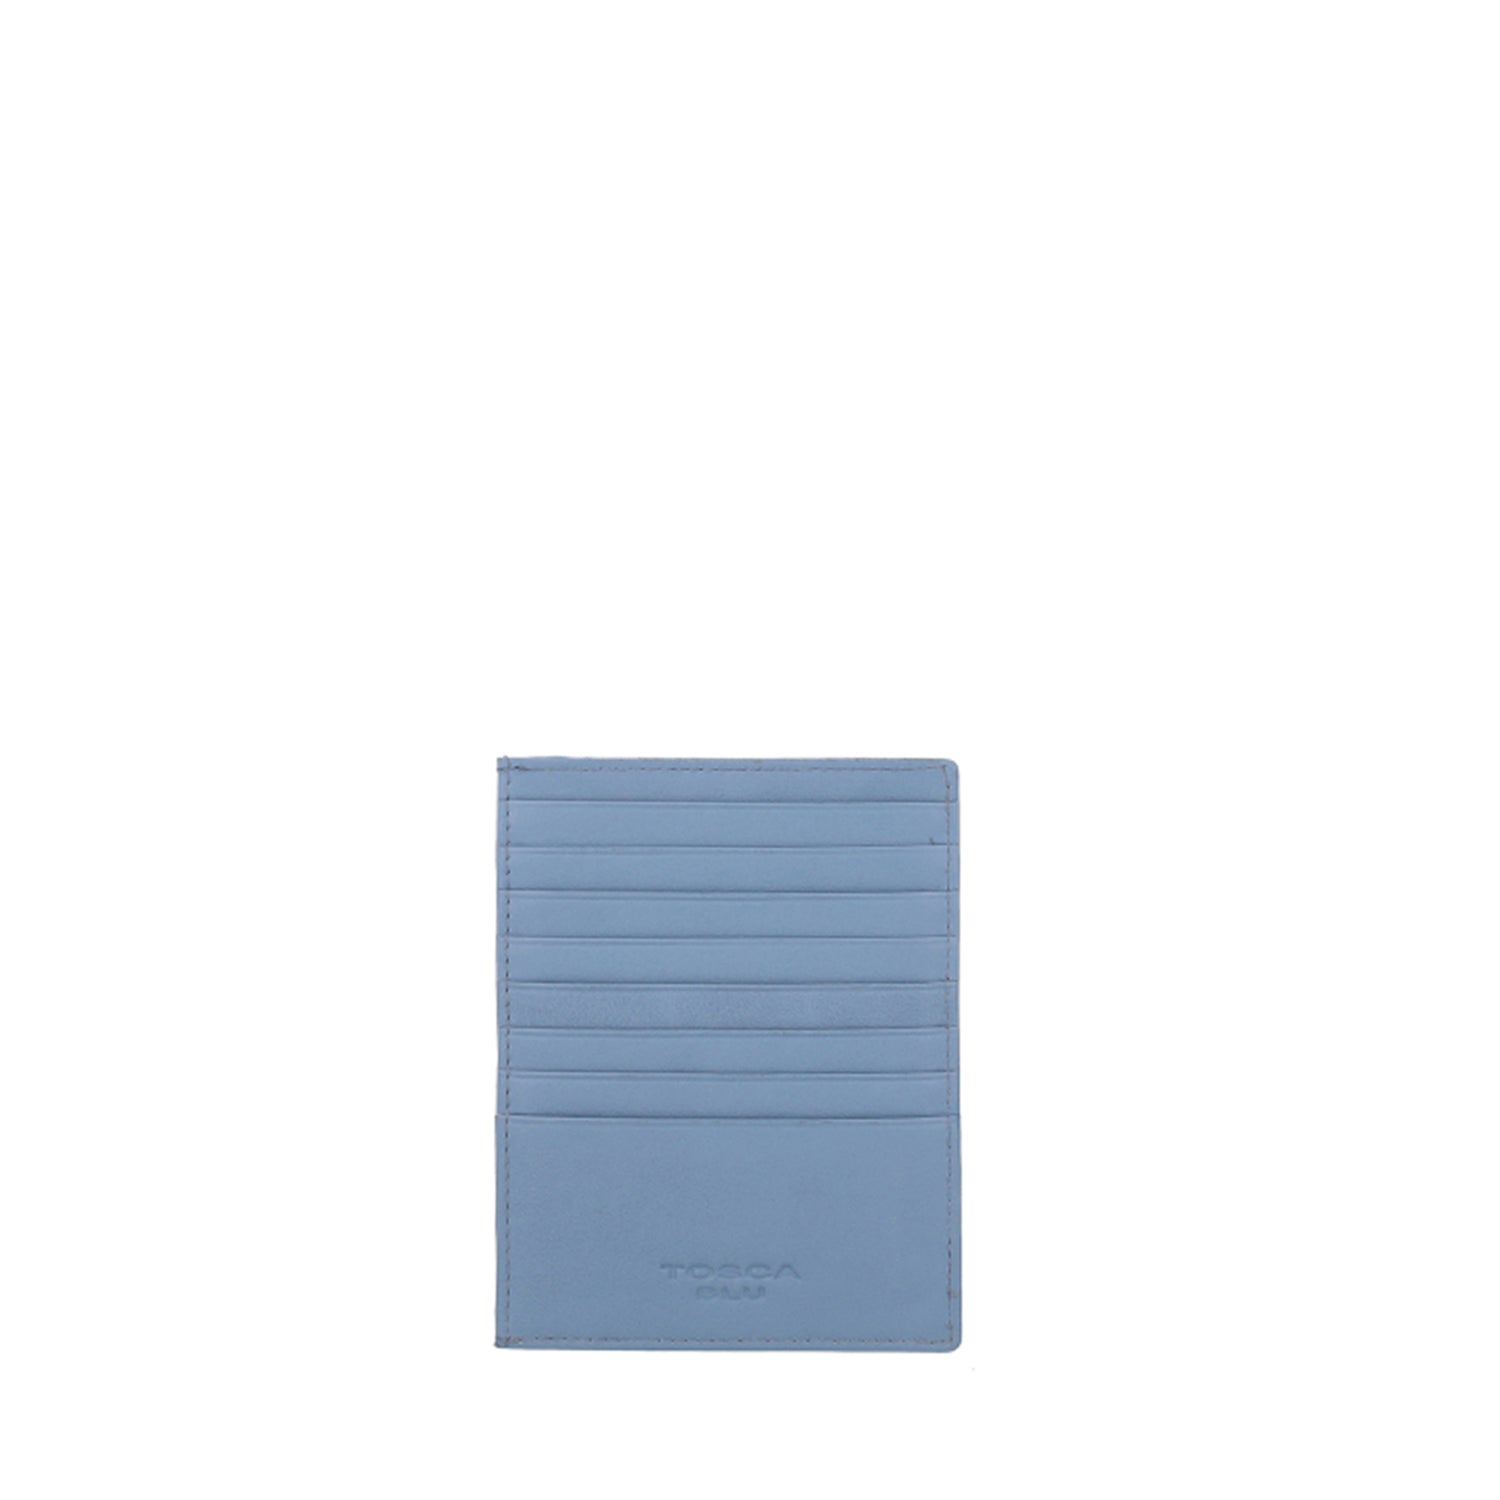 LIGHT BLUE BASIC WALLETS CARD HOLDER IN GENUINE LEATHER